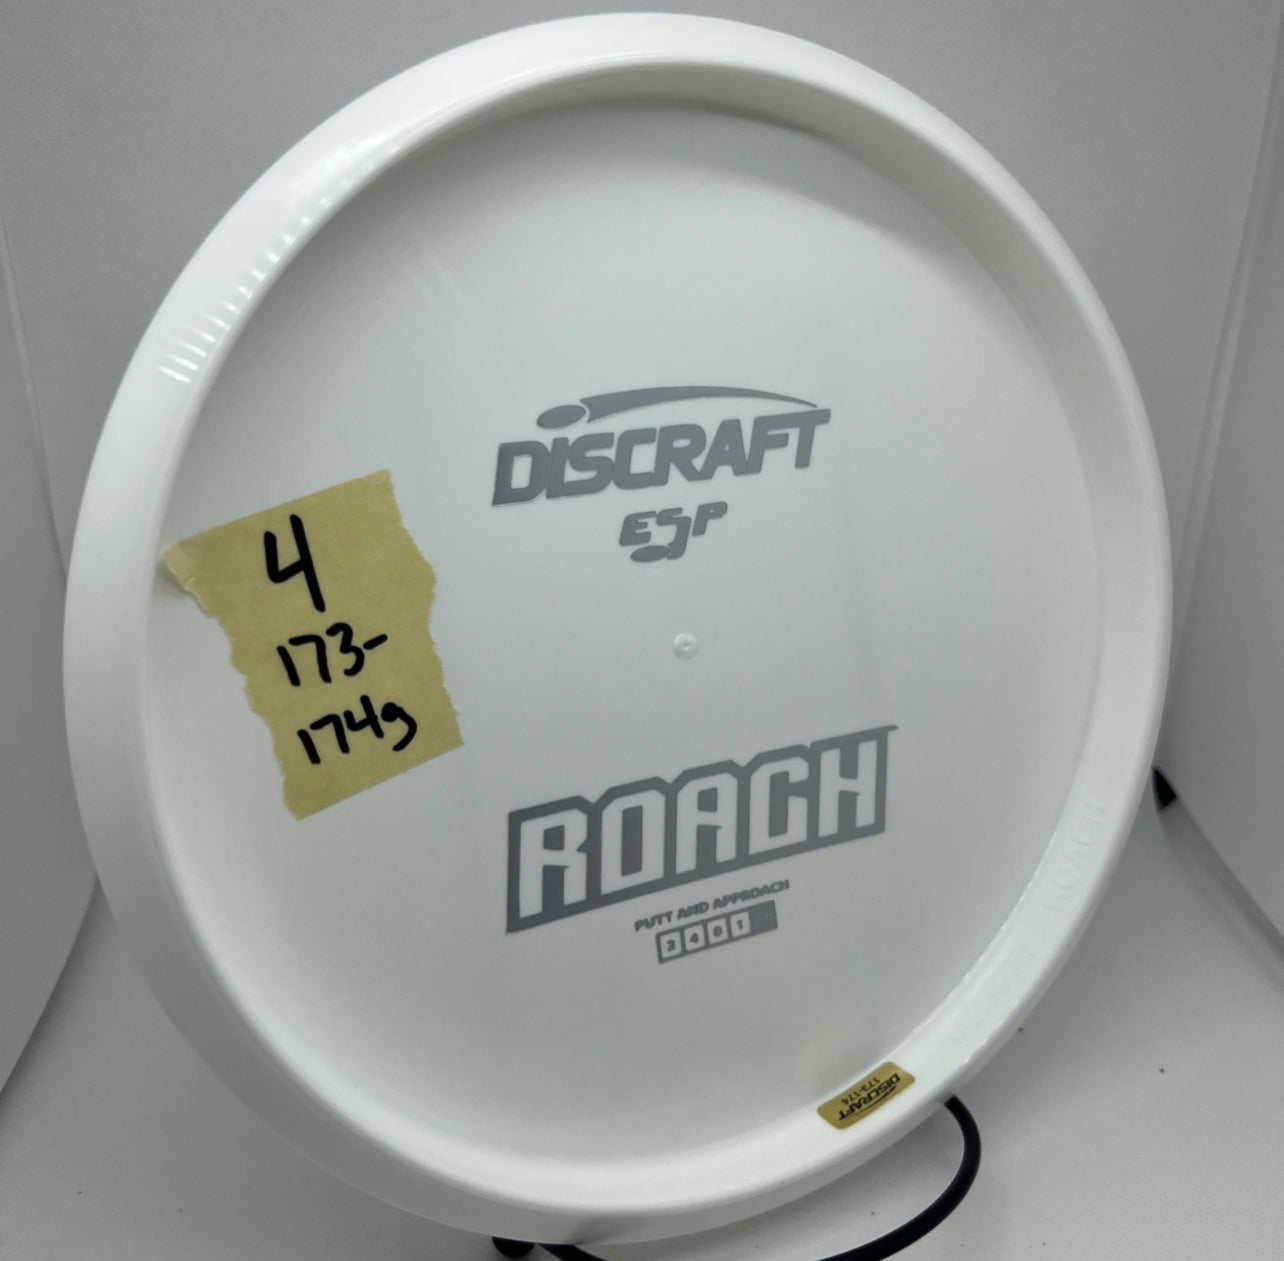 Discraft dyers delight esp roaches